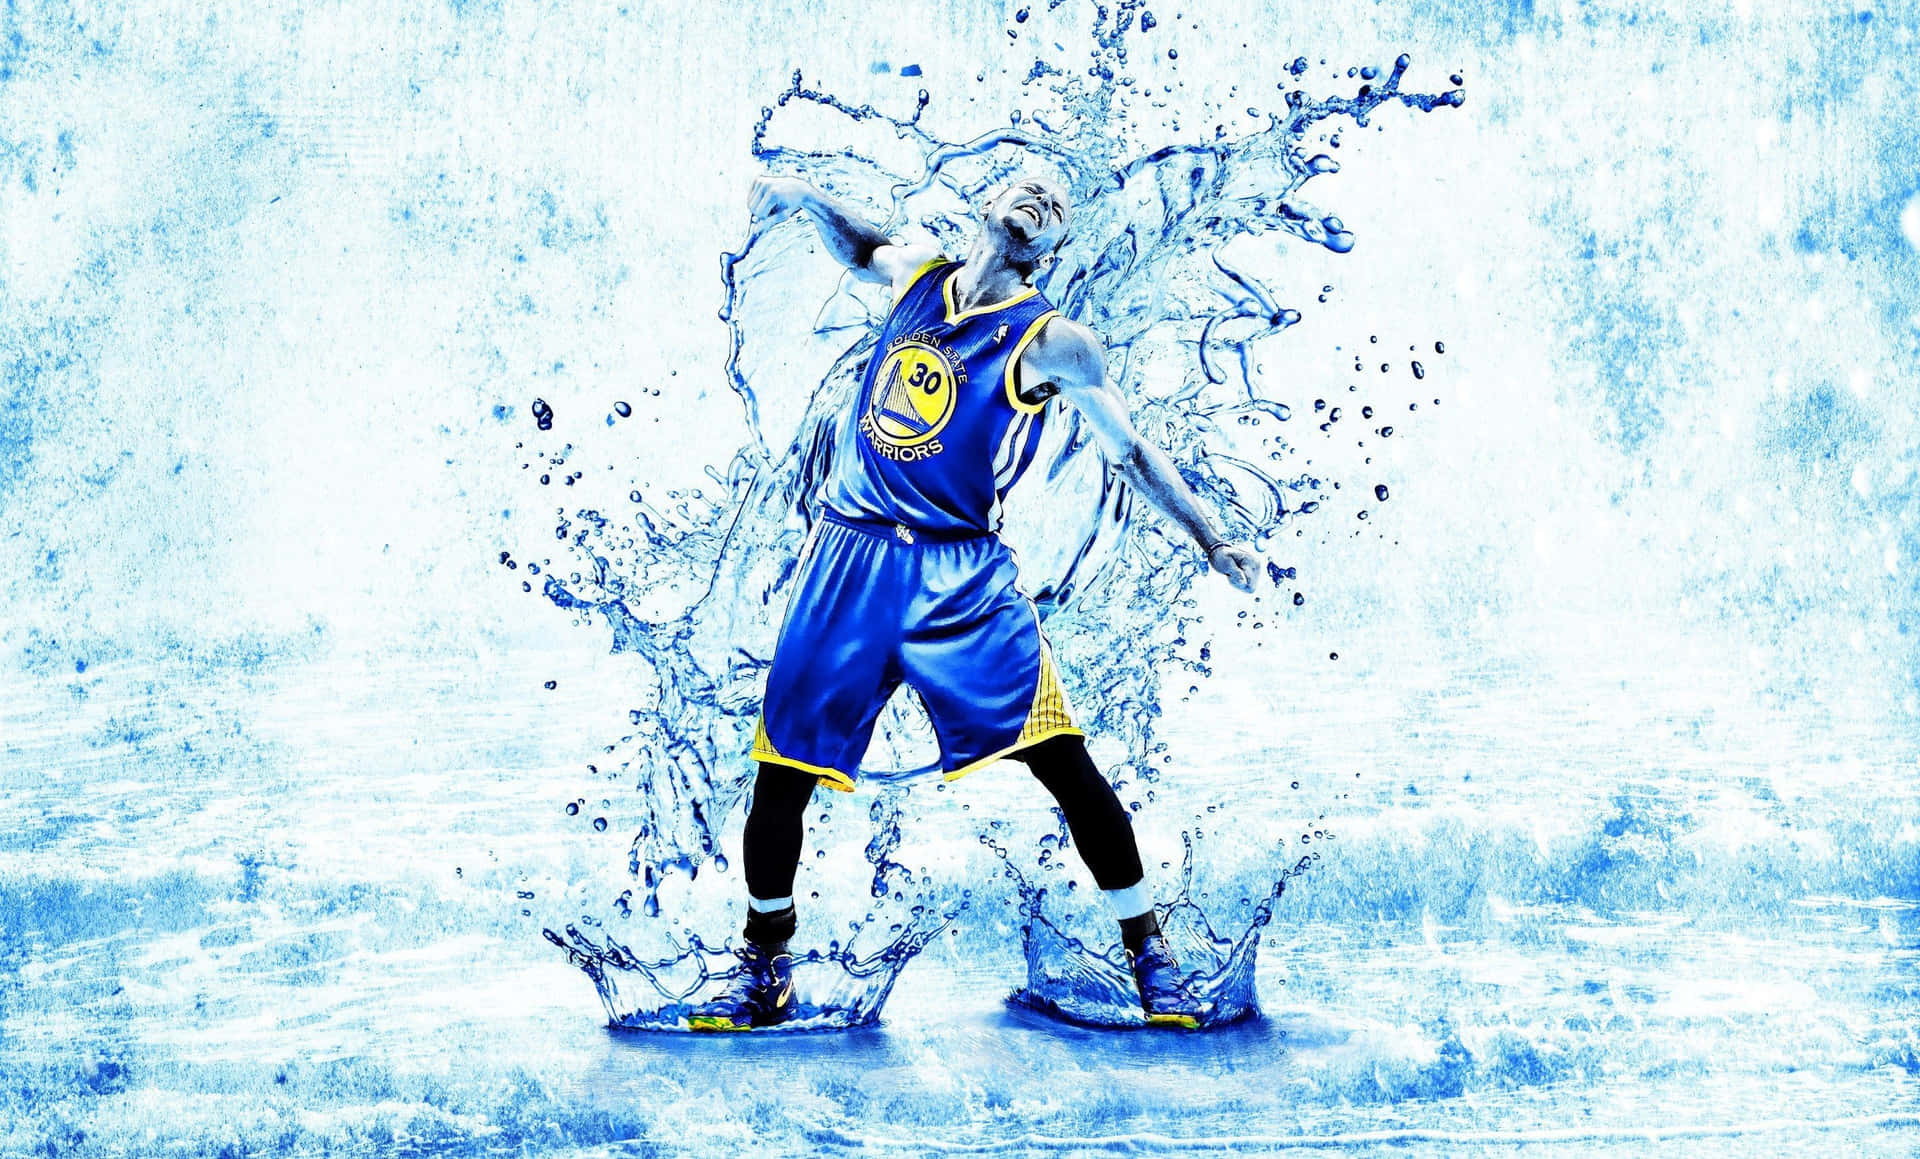 Dynamic Water Splash Basketball Player Wallpaper